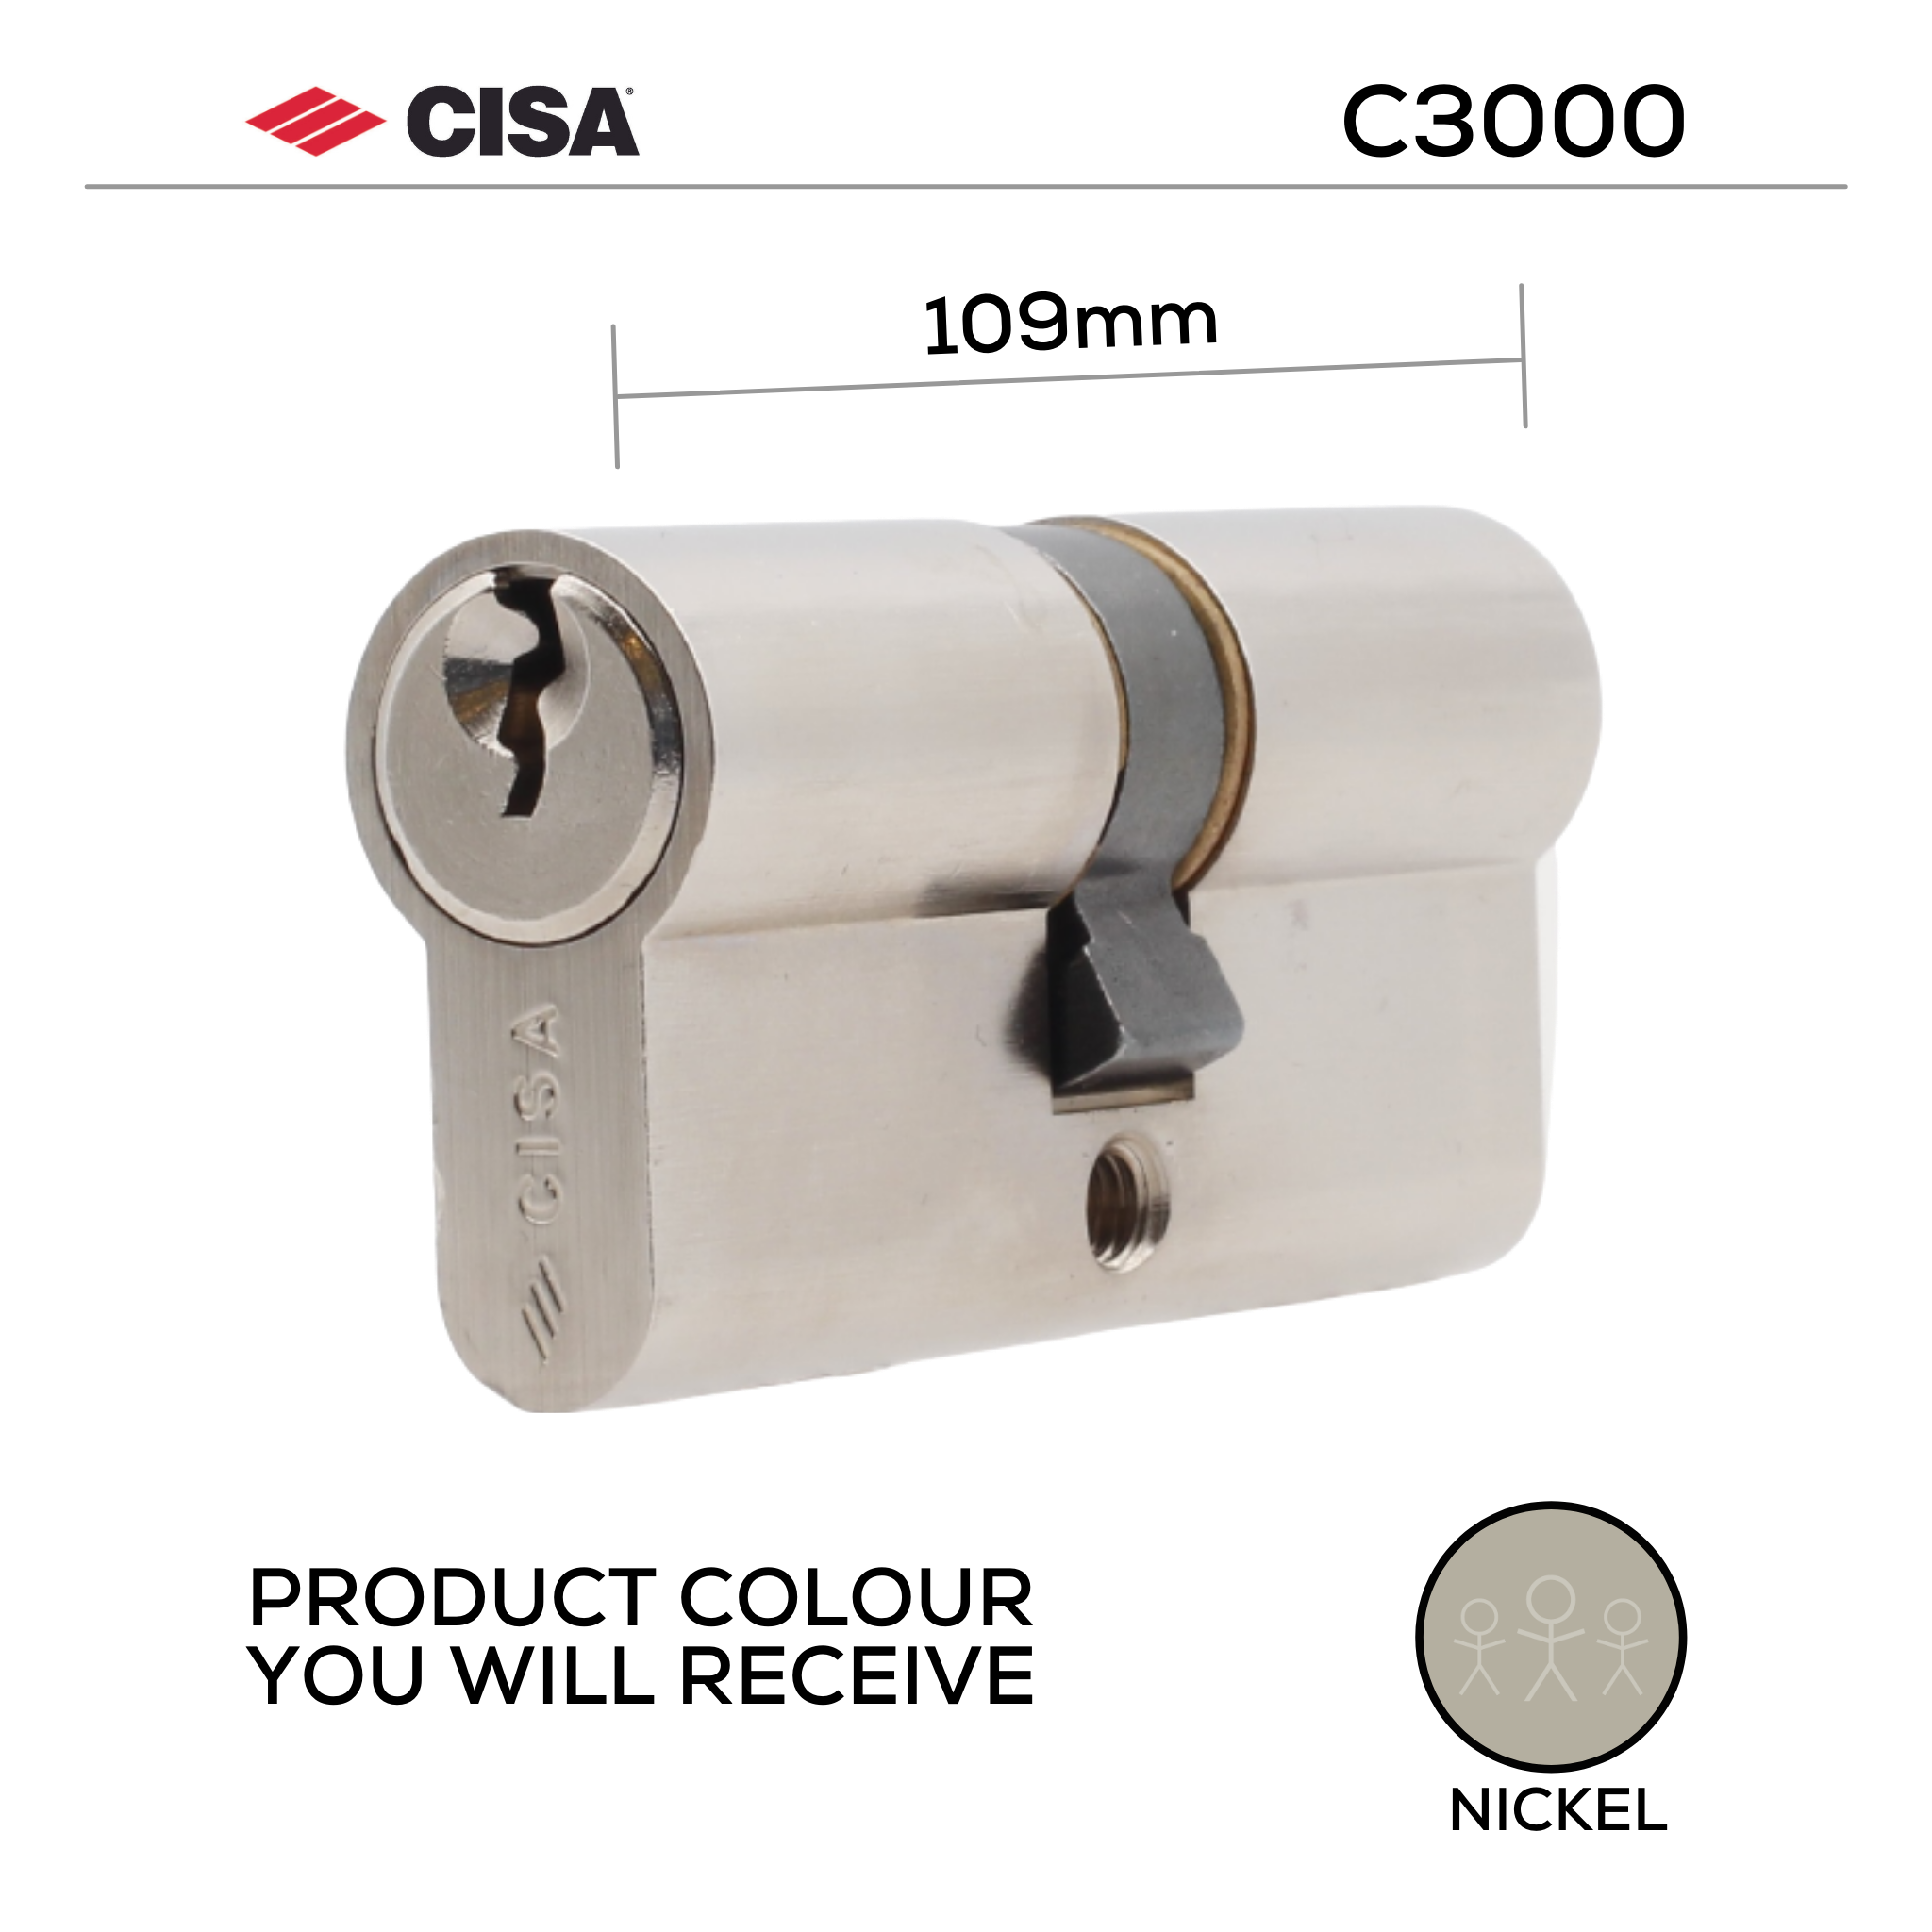 0N310-70-12-KD, 109mm - 54.5/54.5, Double Cylinder, C3000, Key to Key, Keyed to Differ (Standard), 3 Keys, 6 Pin, Nickel, CISA